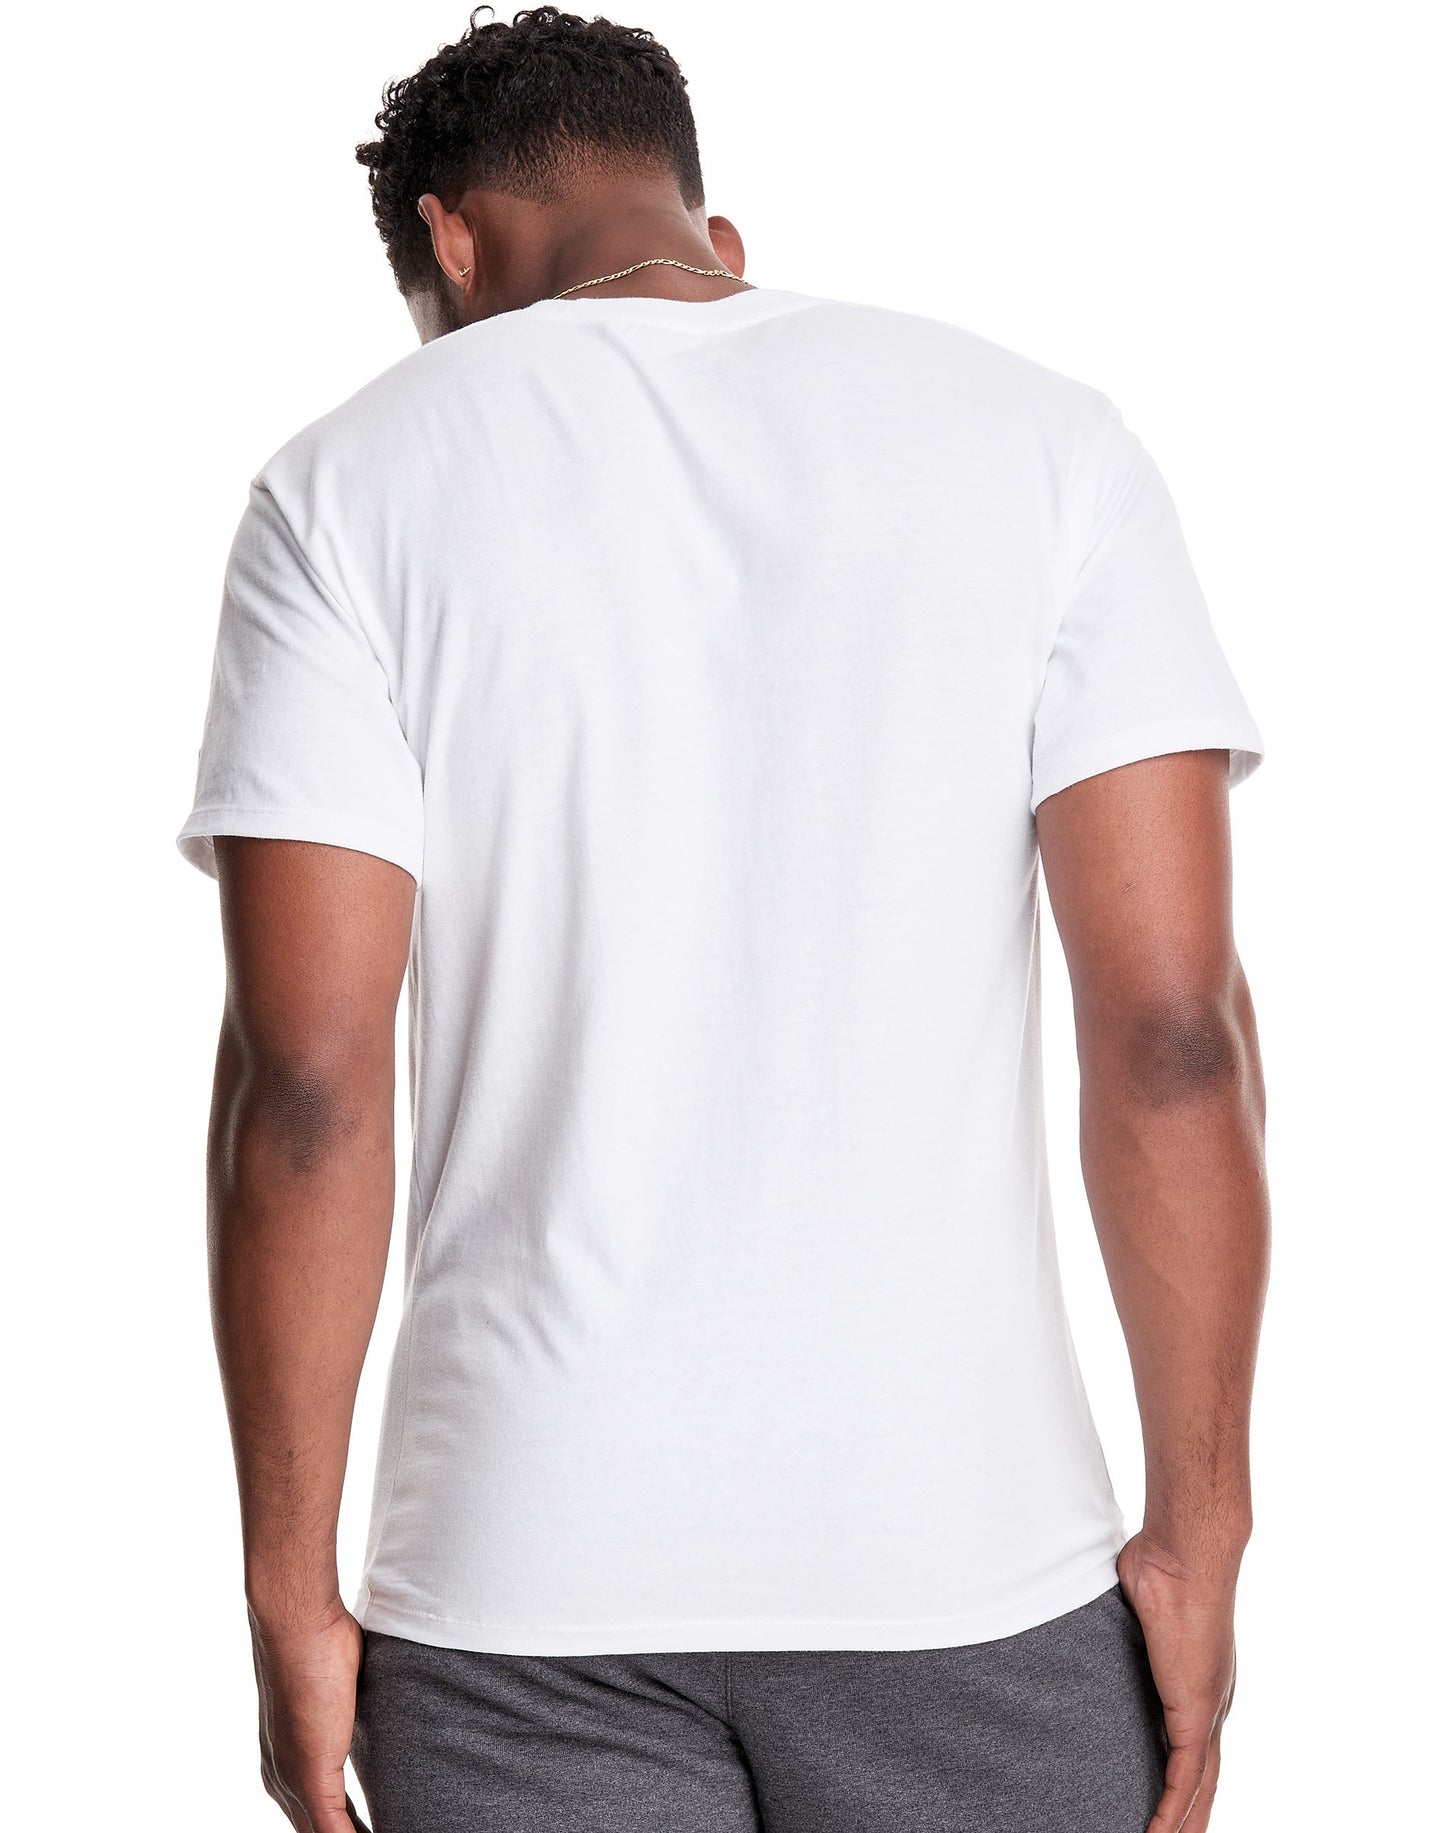 Champion Authentic Script Logo Print Jersey T-Shirt - White